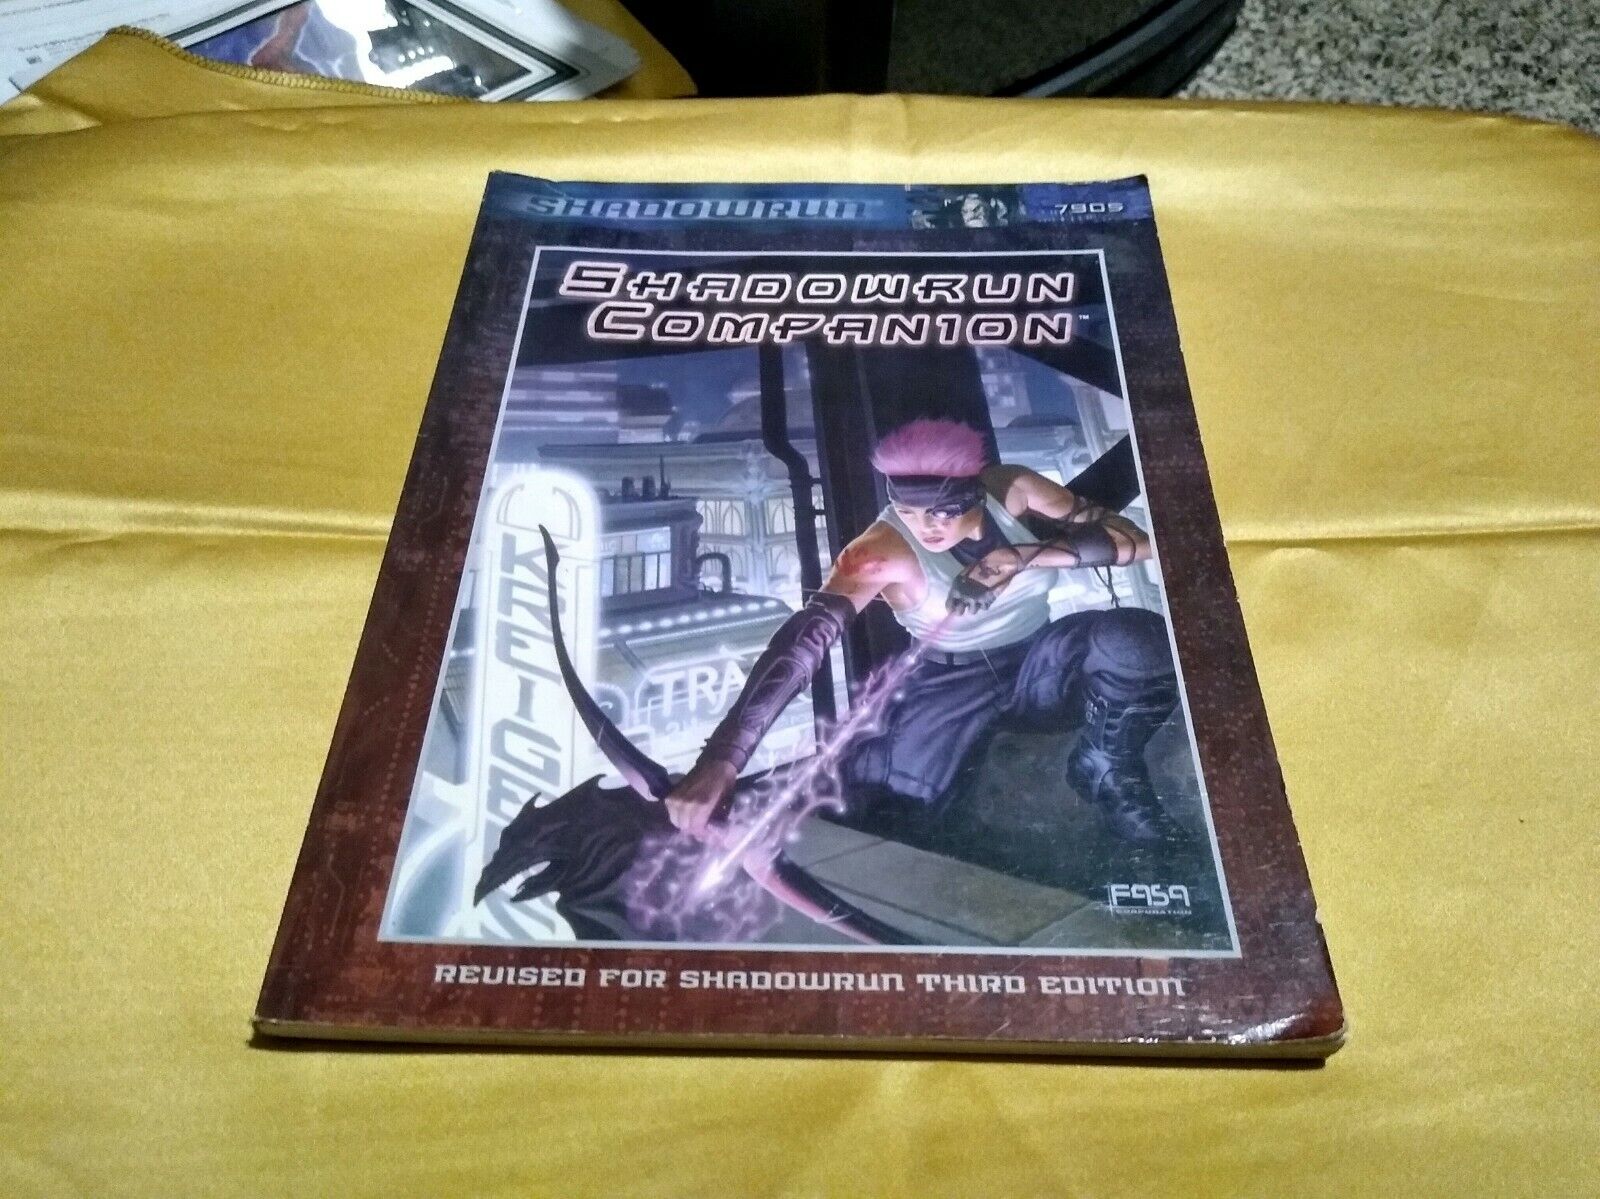 Shadowrun: Shadowrun Companion RPG Fasa Softcover 7905 Very Nice